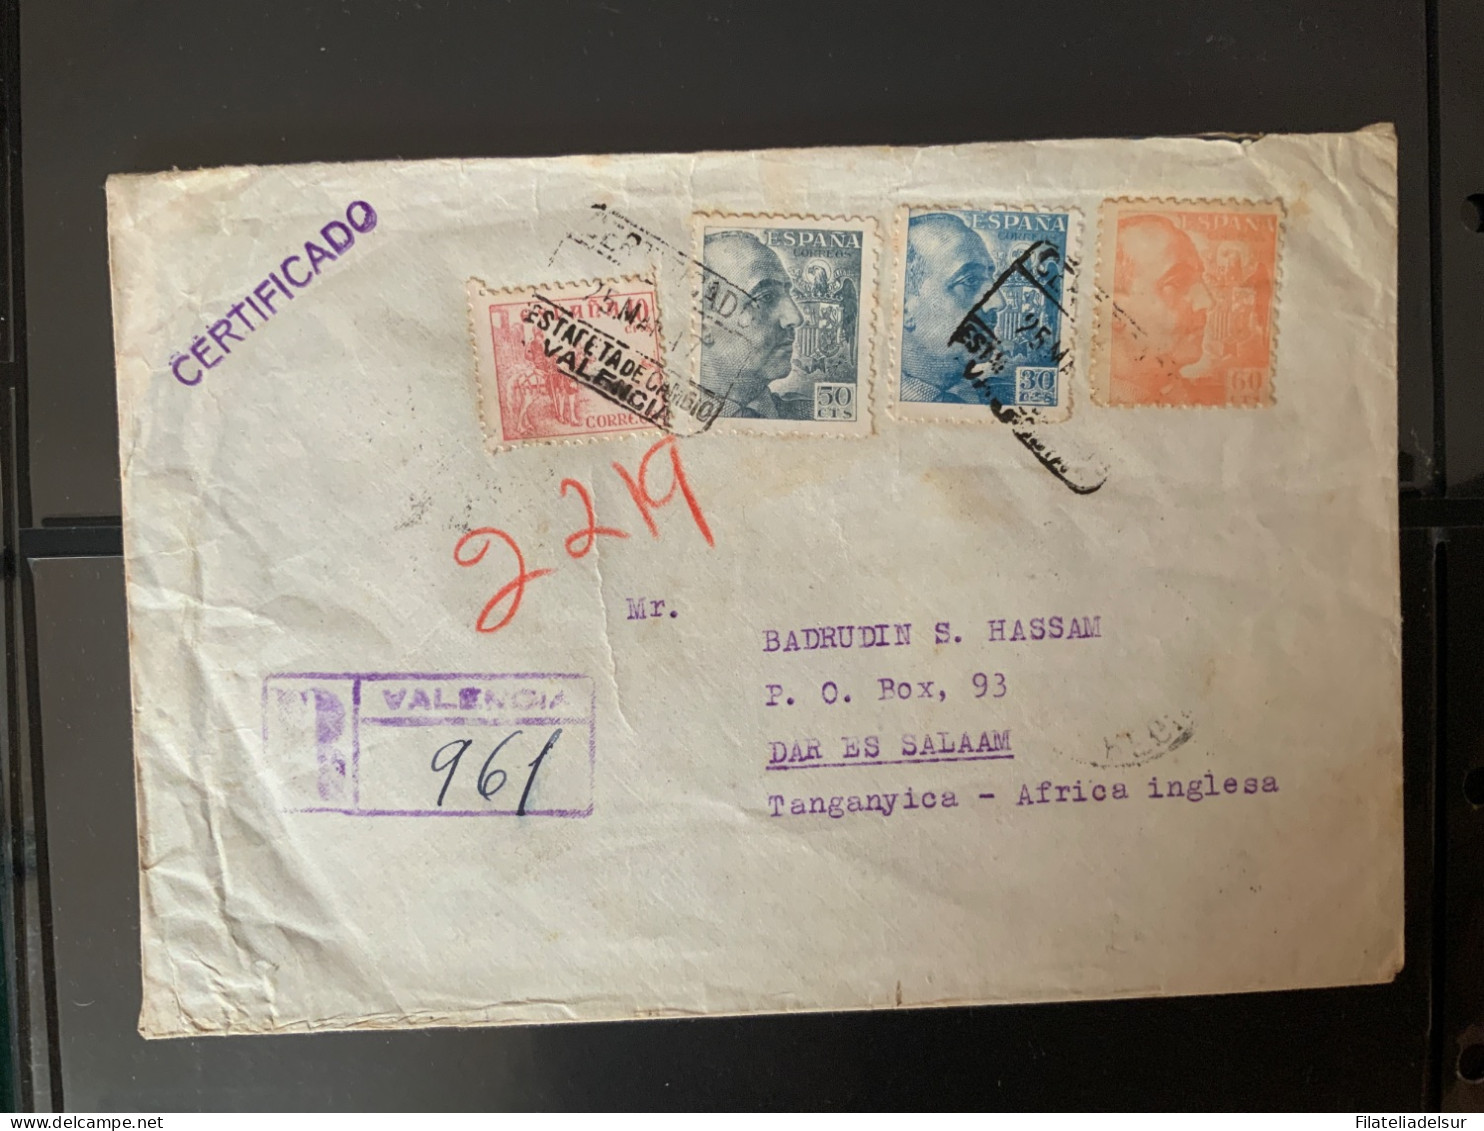 Valencia A Tanganyica. Africa Inglesa. Certificado. 1947. Varias Marcas Transito. - Cartas & Documentos